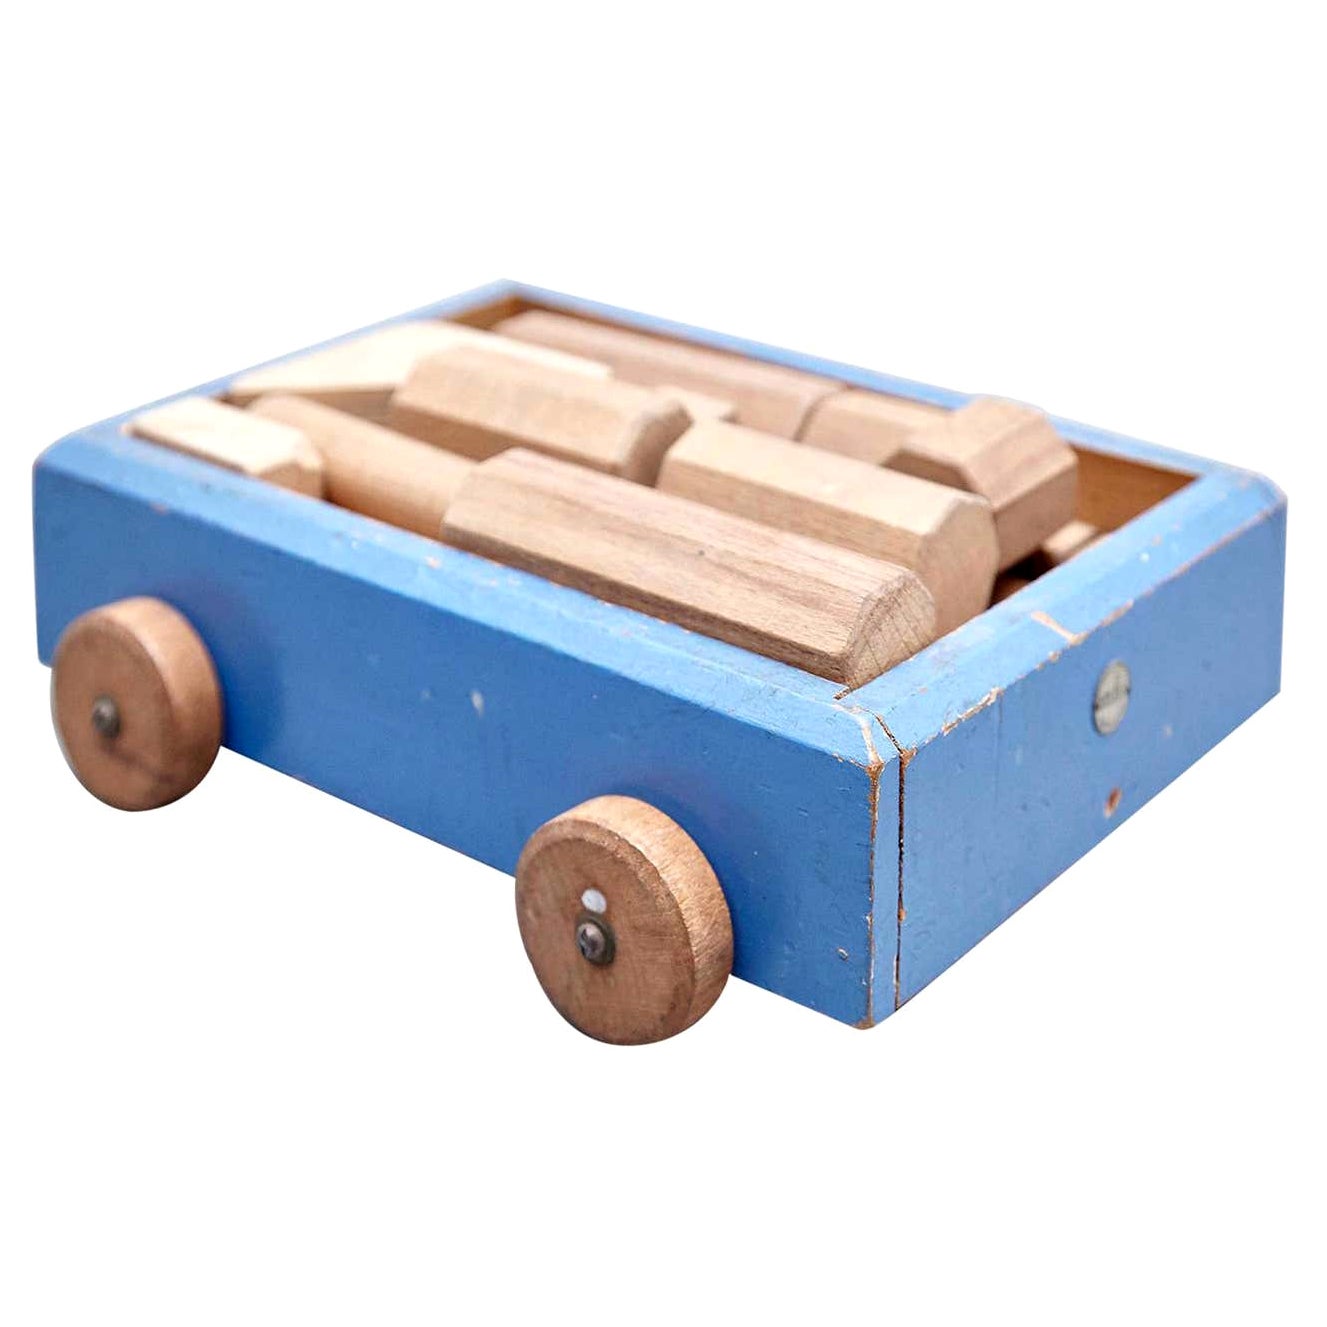 Ko Verzuu for Ado, Mid-Century Modern, Wood Car Construction Netherlands Toy For Sale